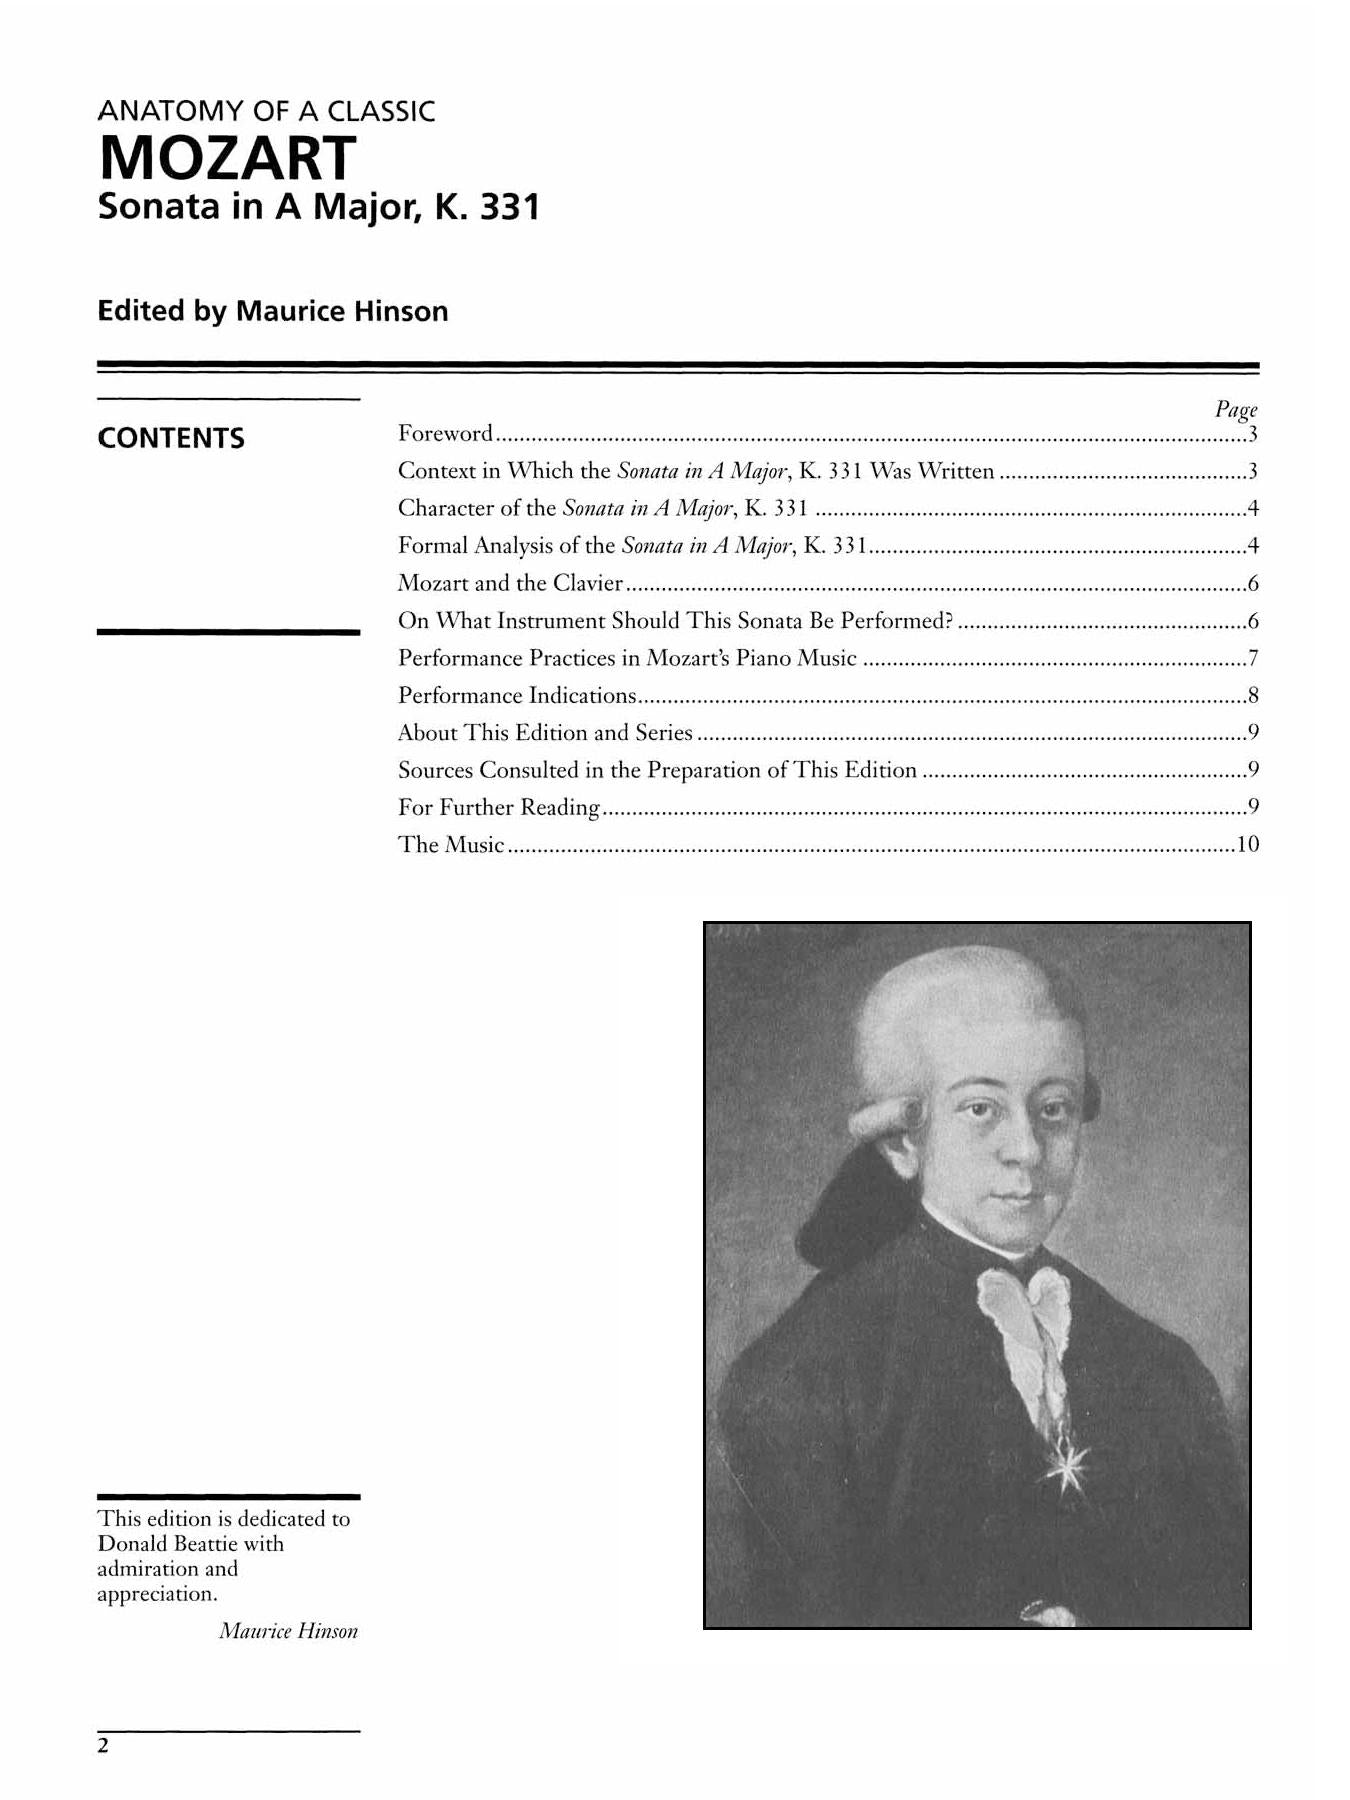 Mozart: Sonata in A Major, K. 331 (Complete)